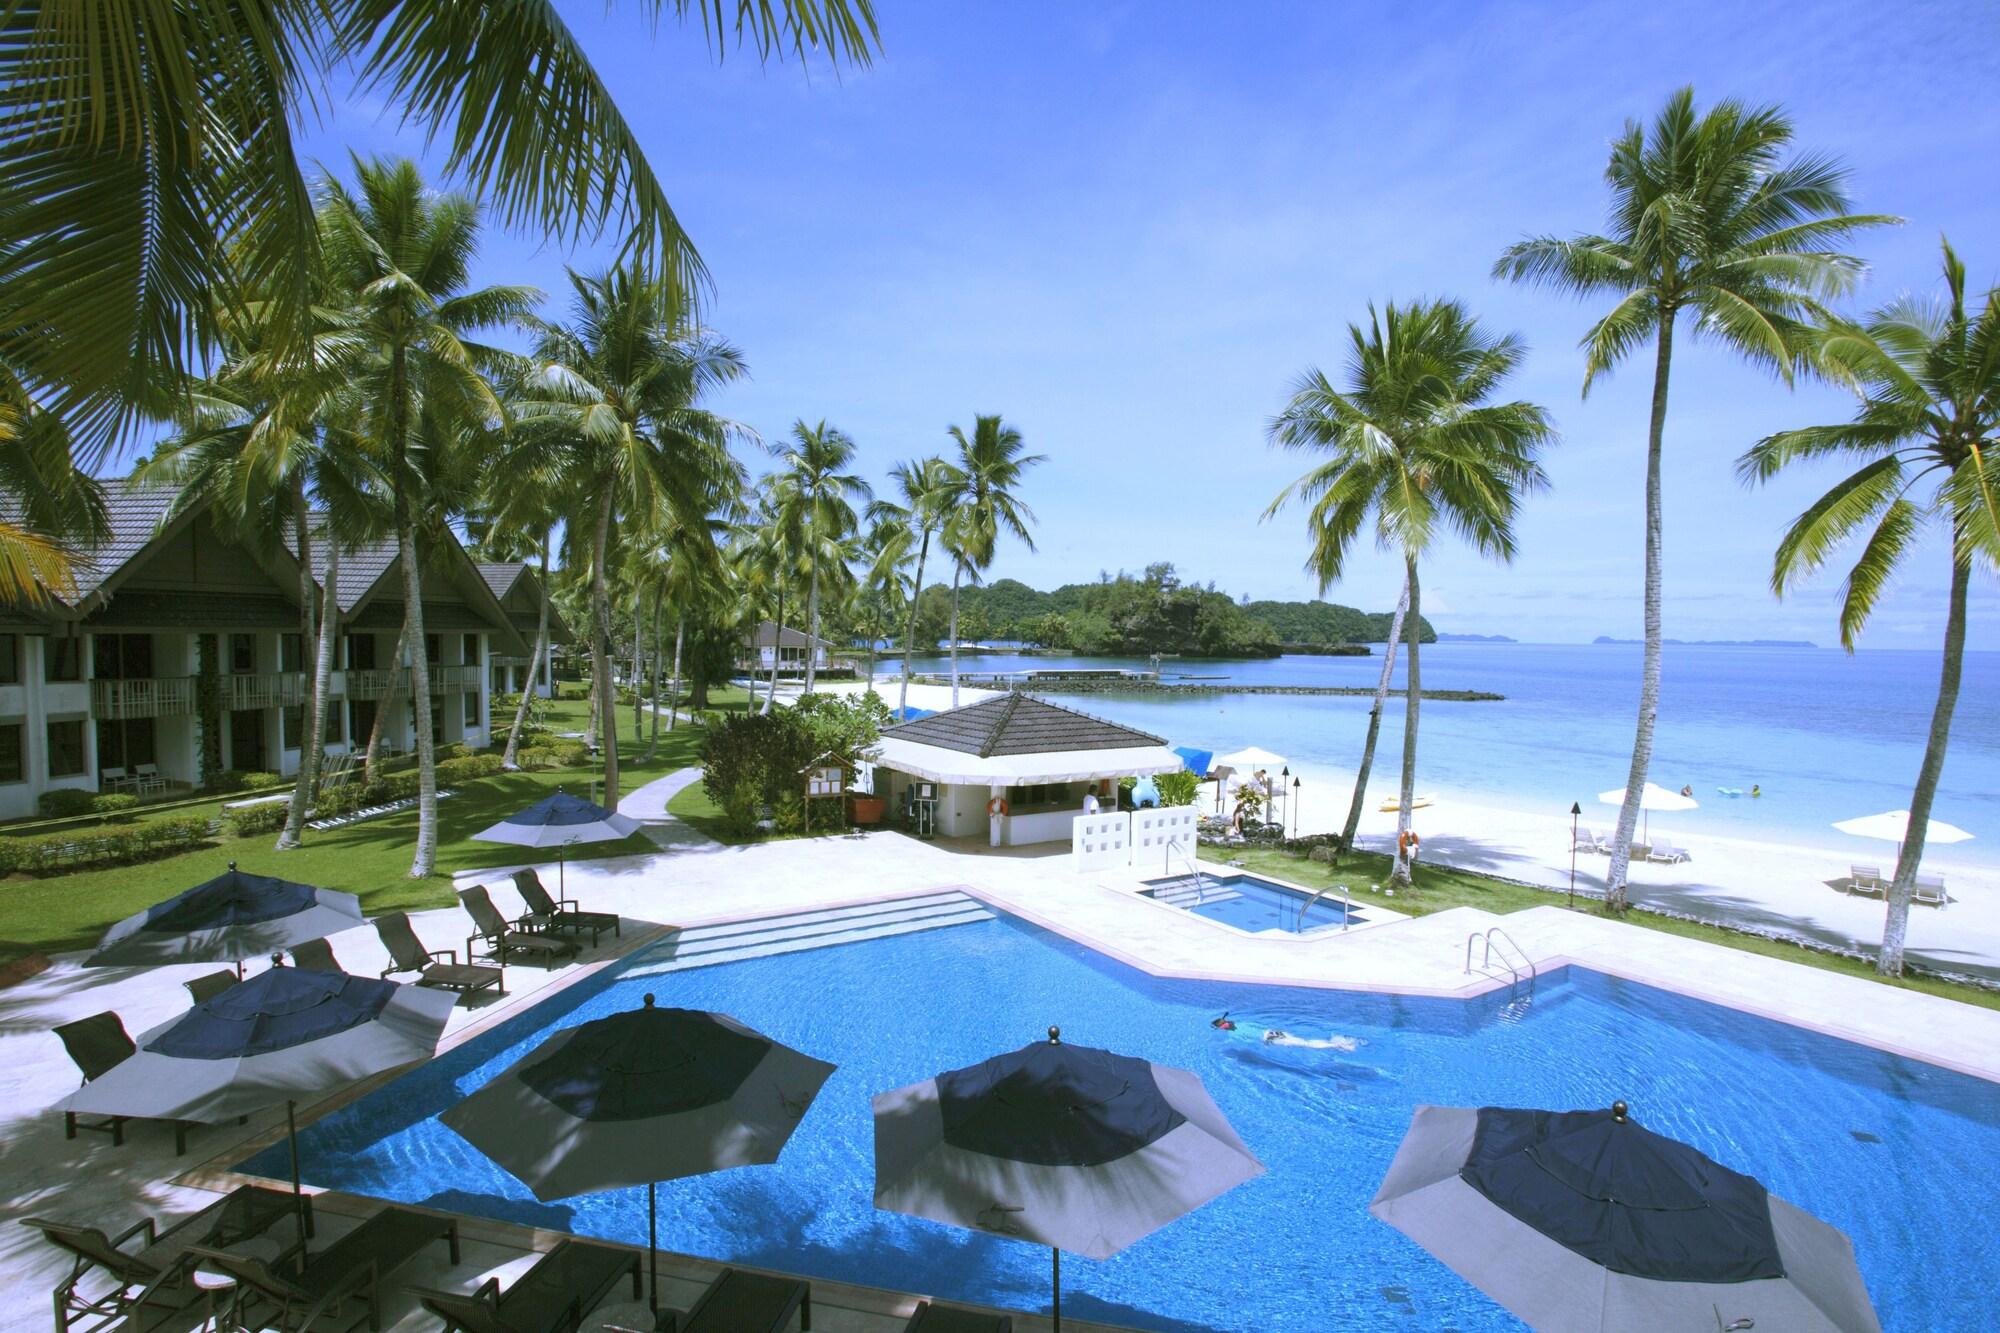 Foto af Palau Pacific Resort hotelområde